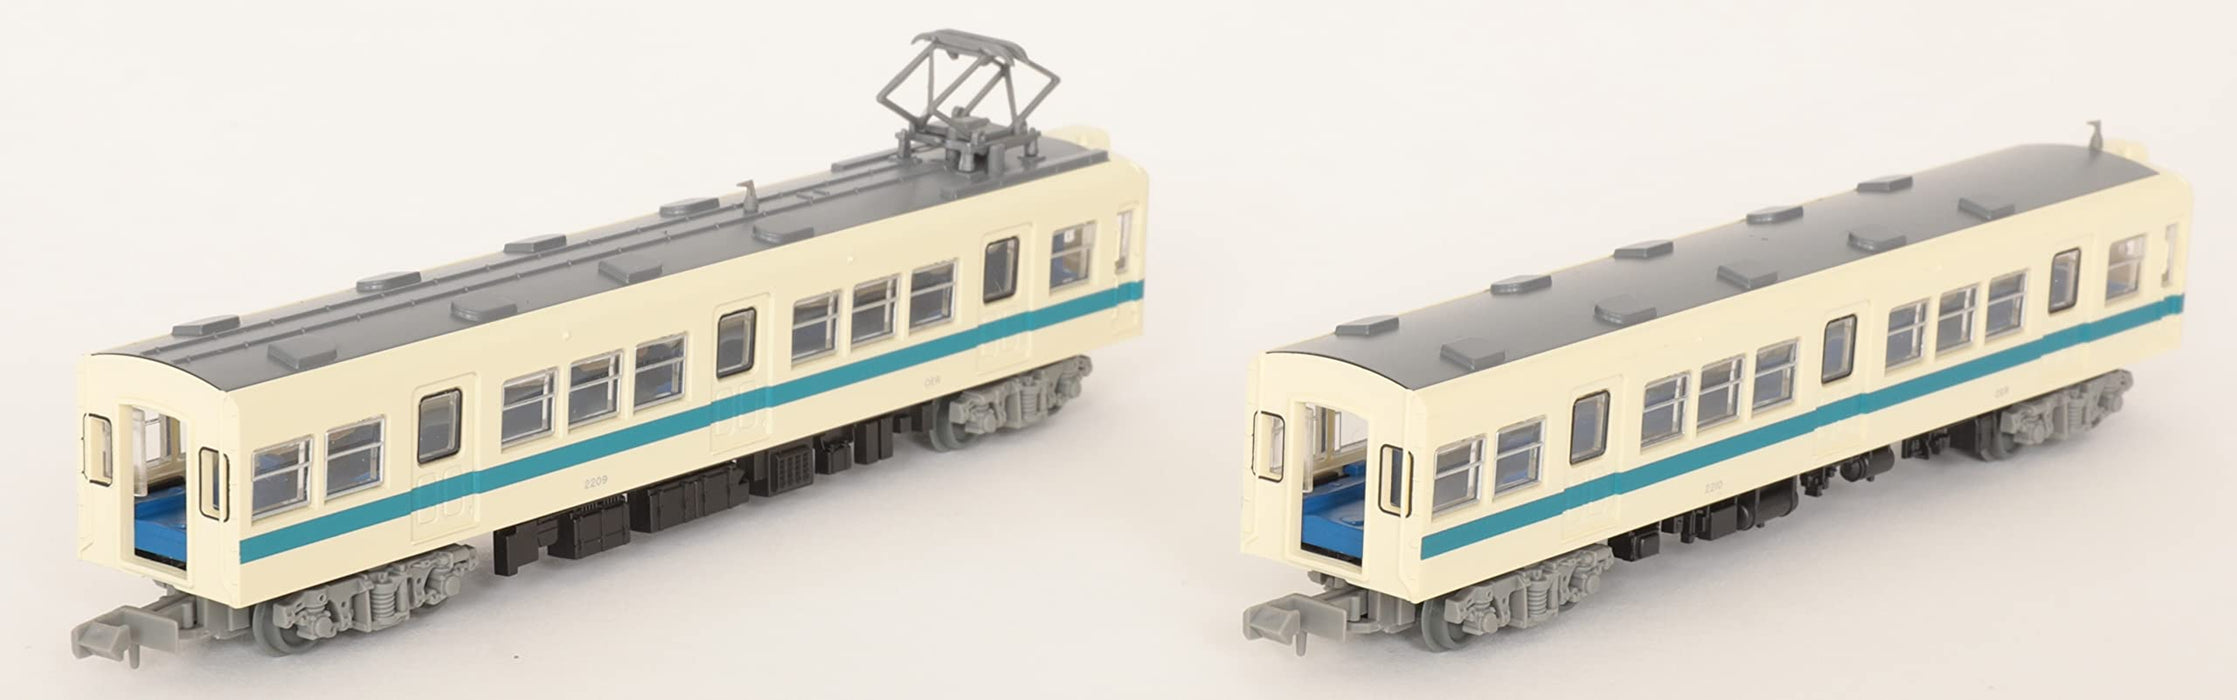 Tomytec Railway Collection - Odakyu Electric Railway Type 2200 Coffret de 2 voitures A Production limitée 316350